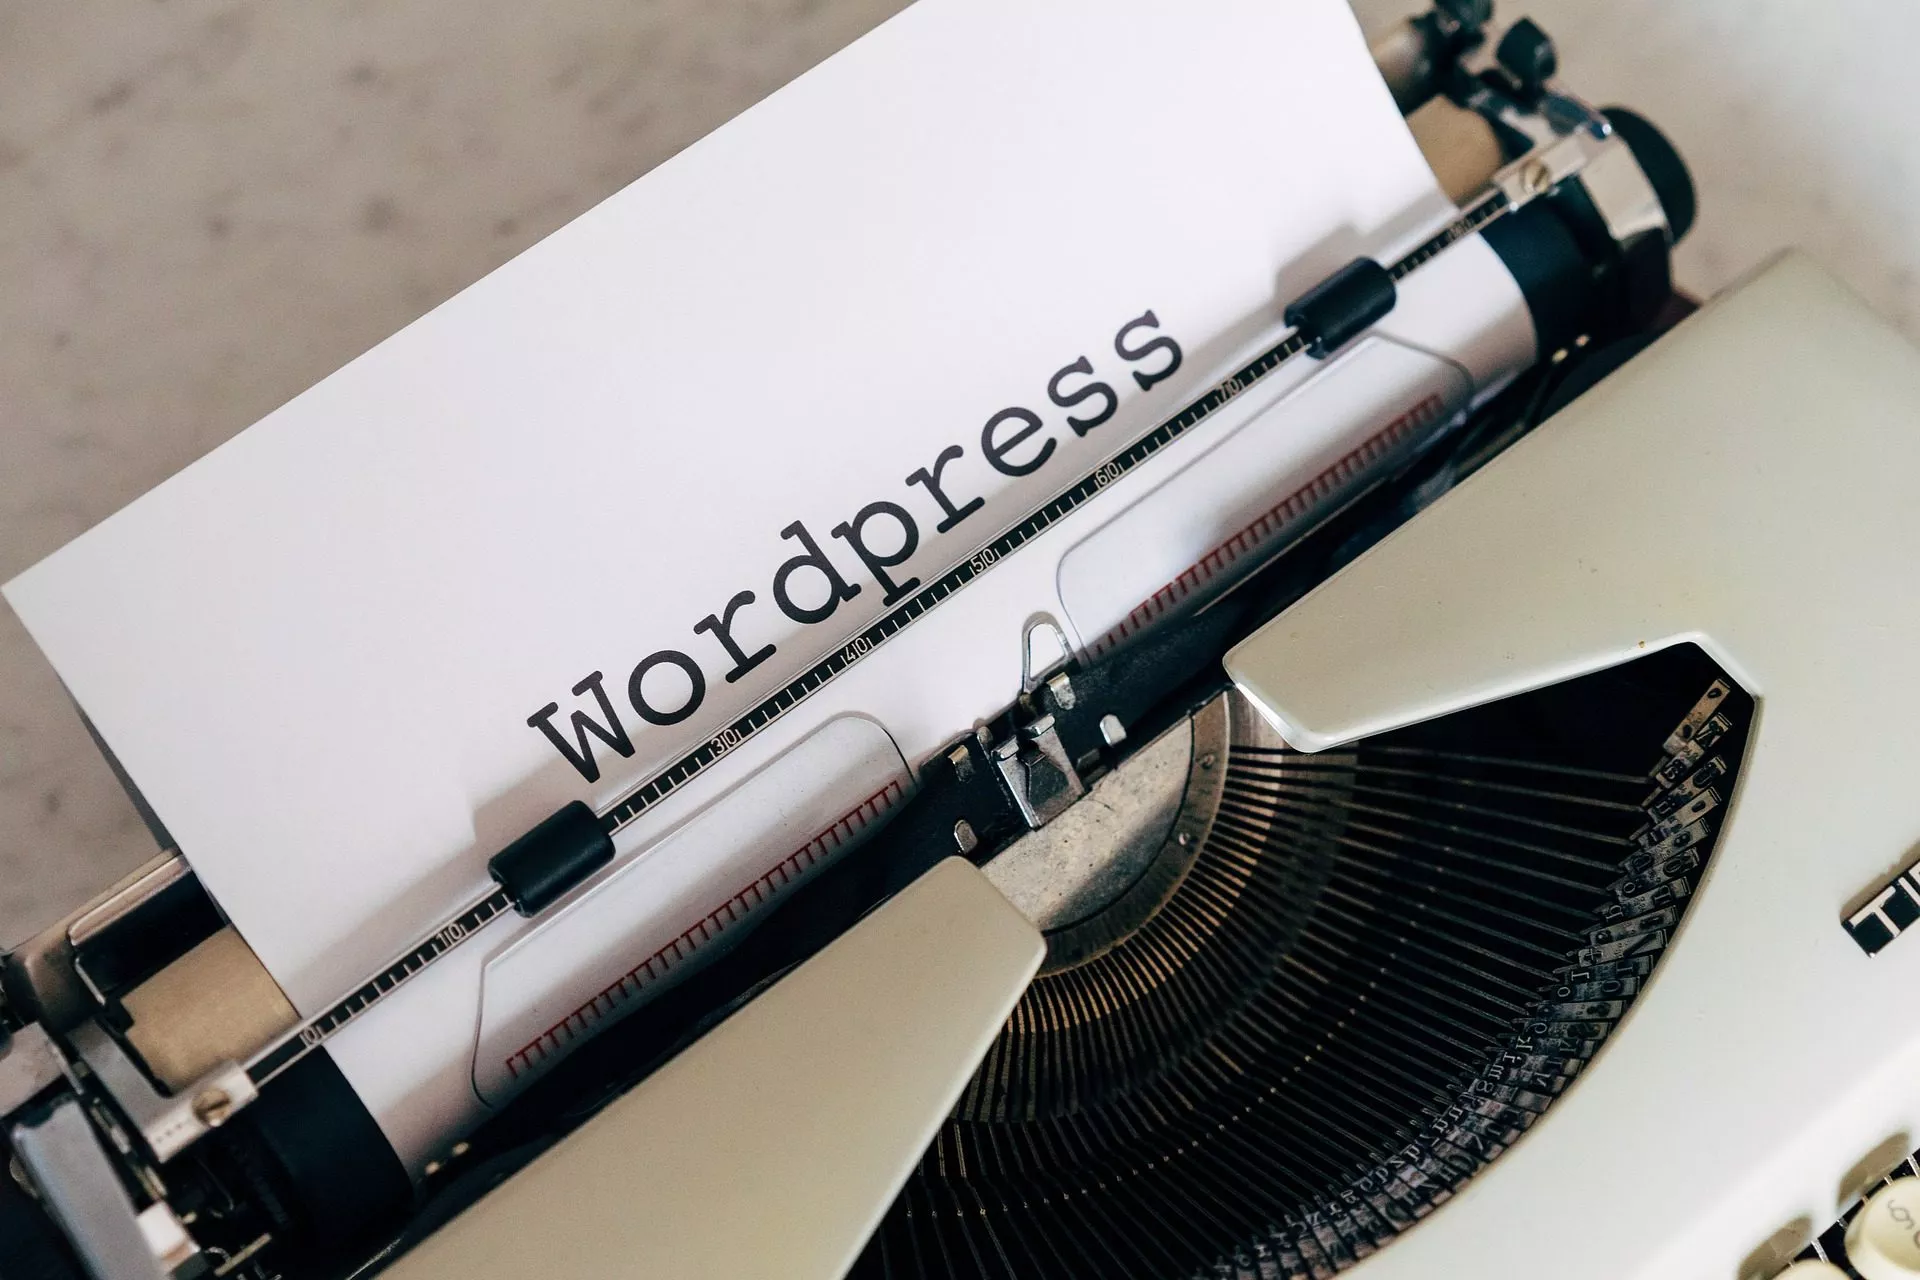 comment supprimer theme wordpress facilement 15 | Comment supprimer un Thème WordPress simplement ?